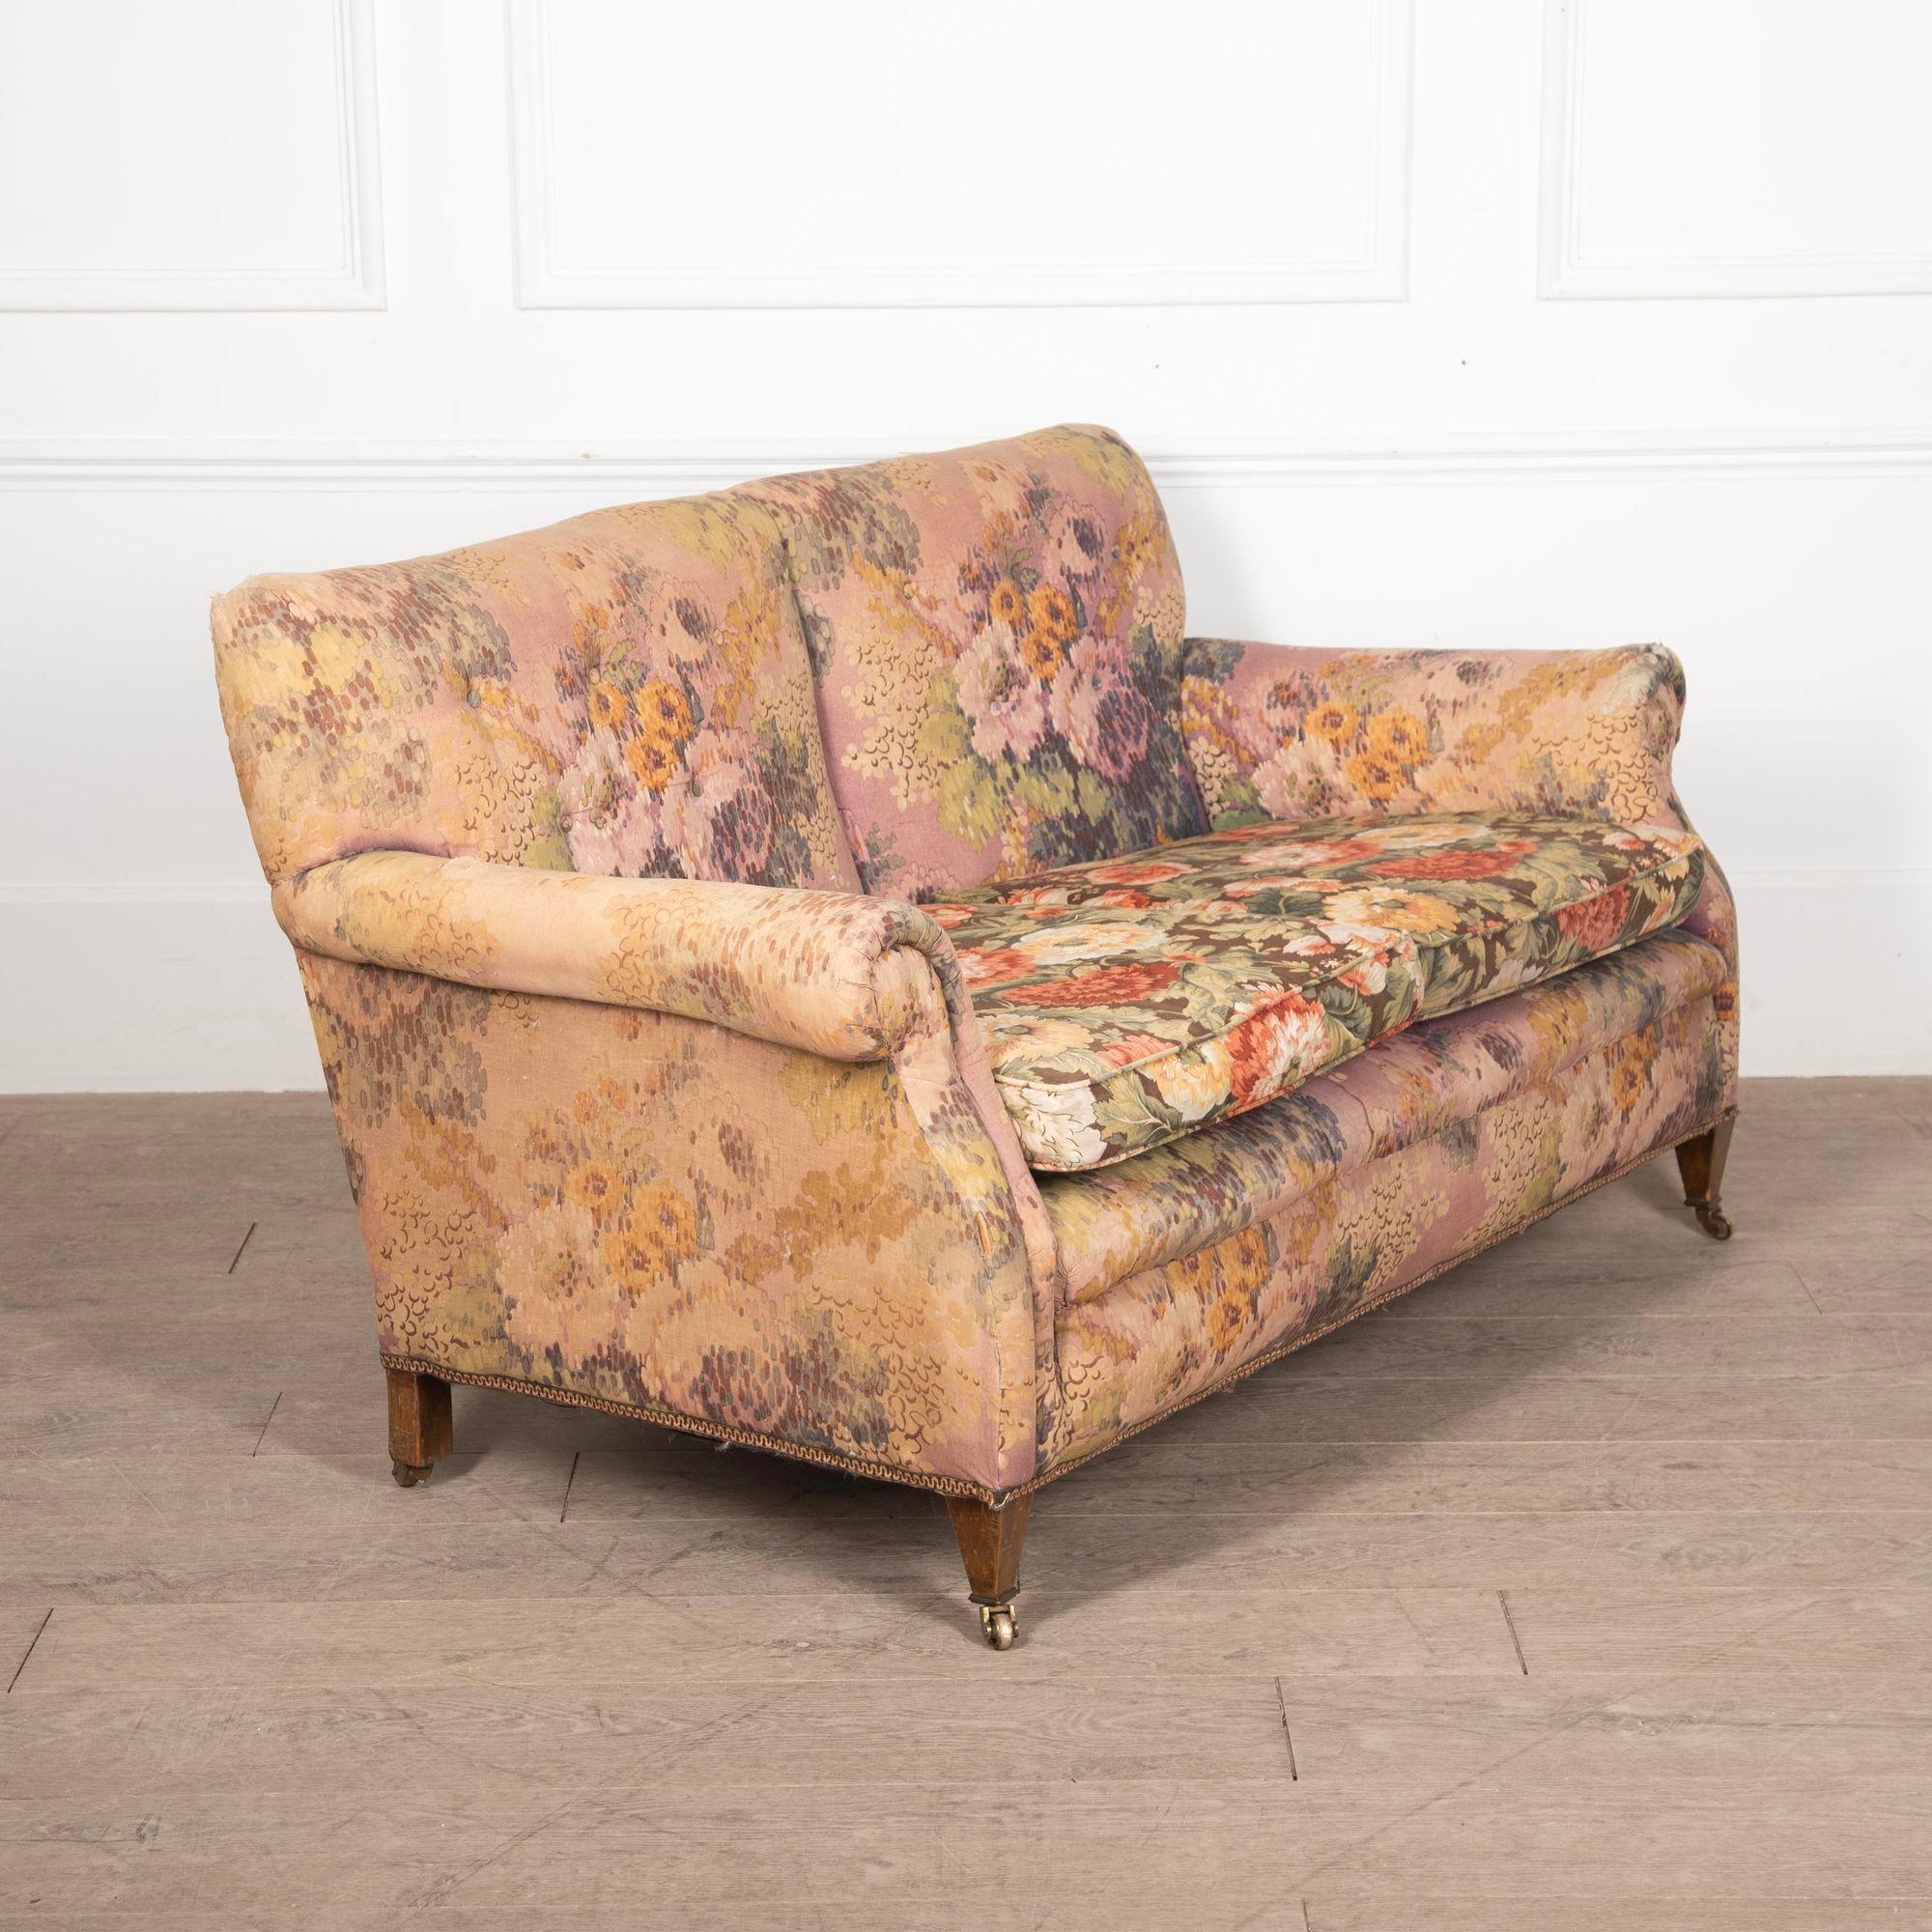 Early 20th Century Howard Leeds style sofa, by Harrods London.